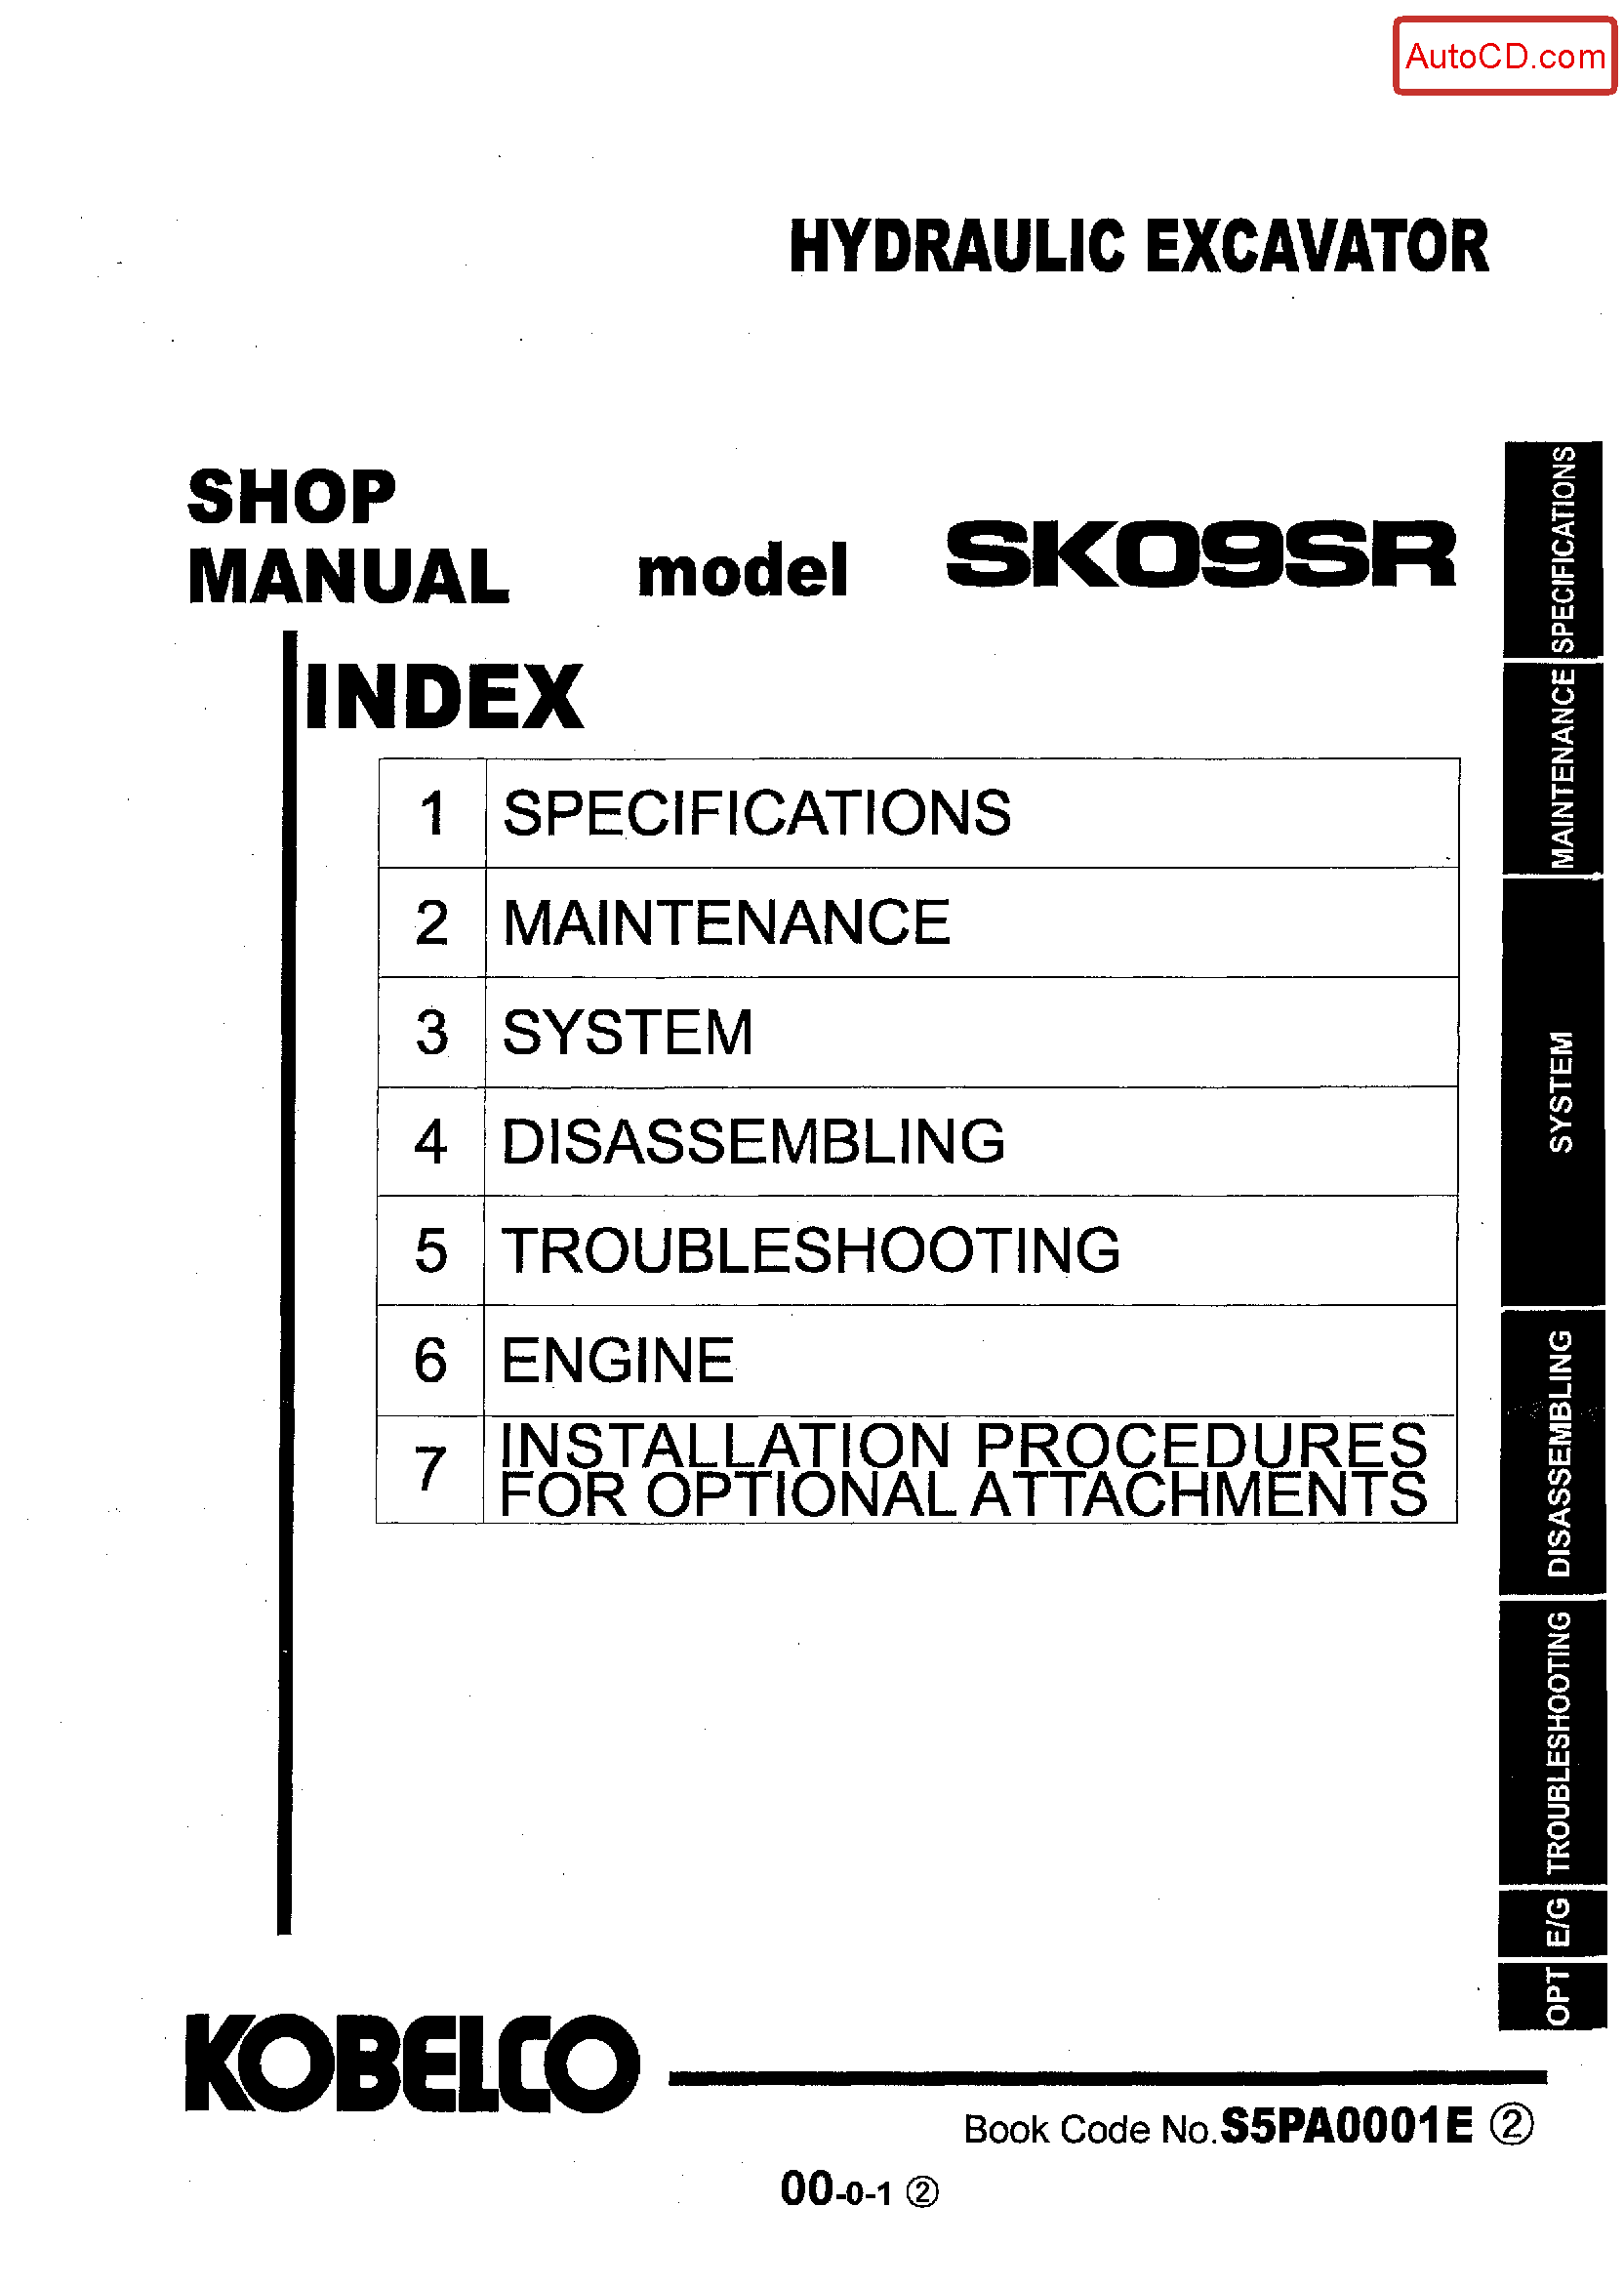 Kobelco SK09SR Hydraulic Excavator Service Manual